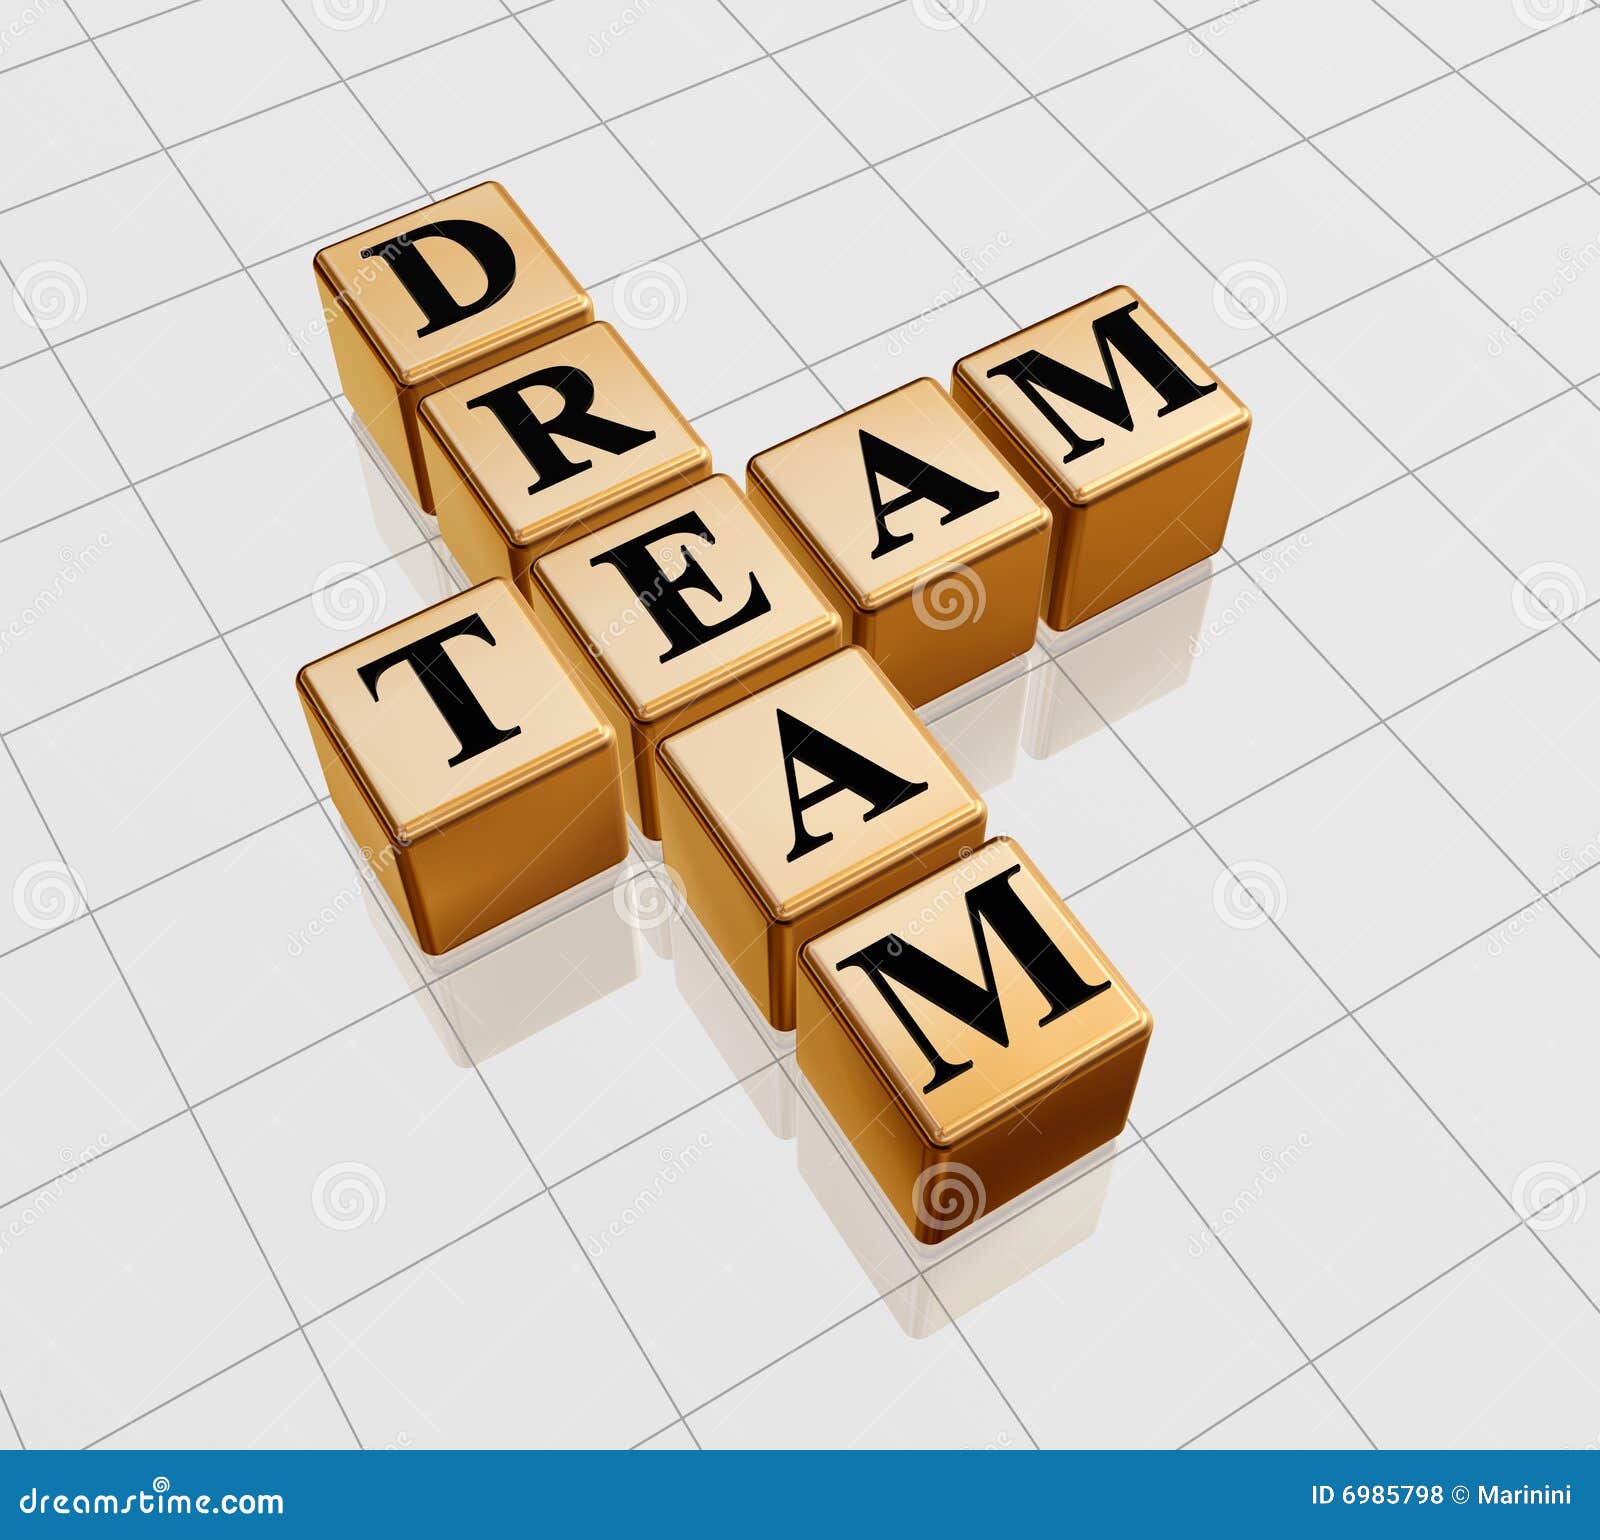 Dream Team Street Sign Illustration Design Stock Illustration -  Illustration of computer, business: 44876568